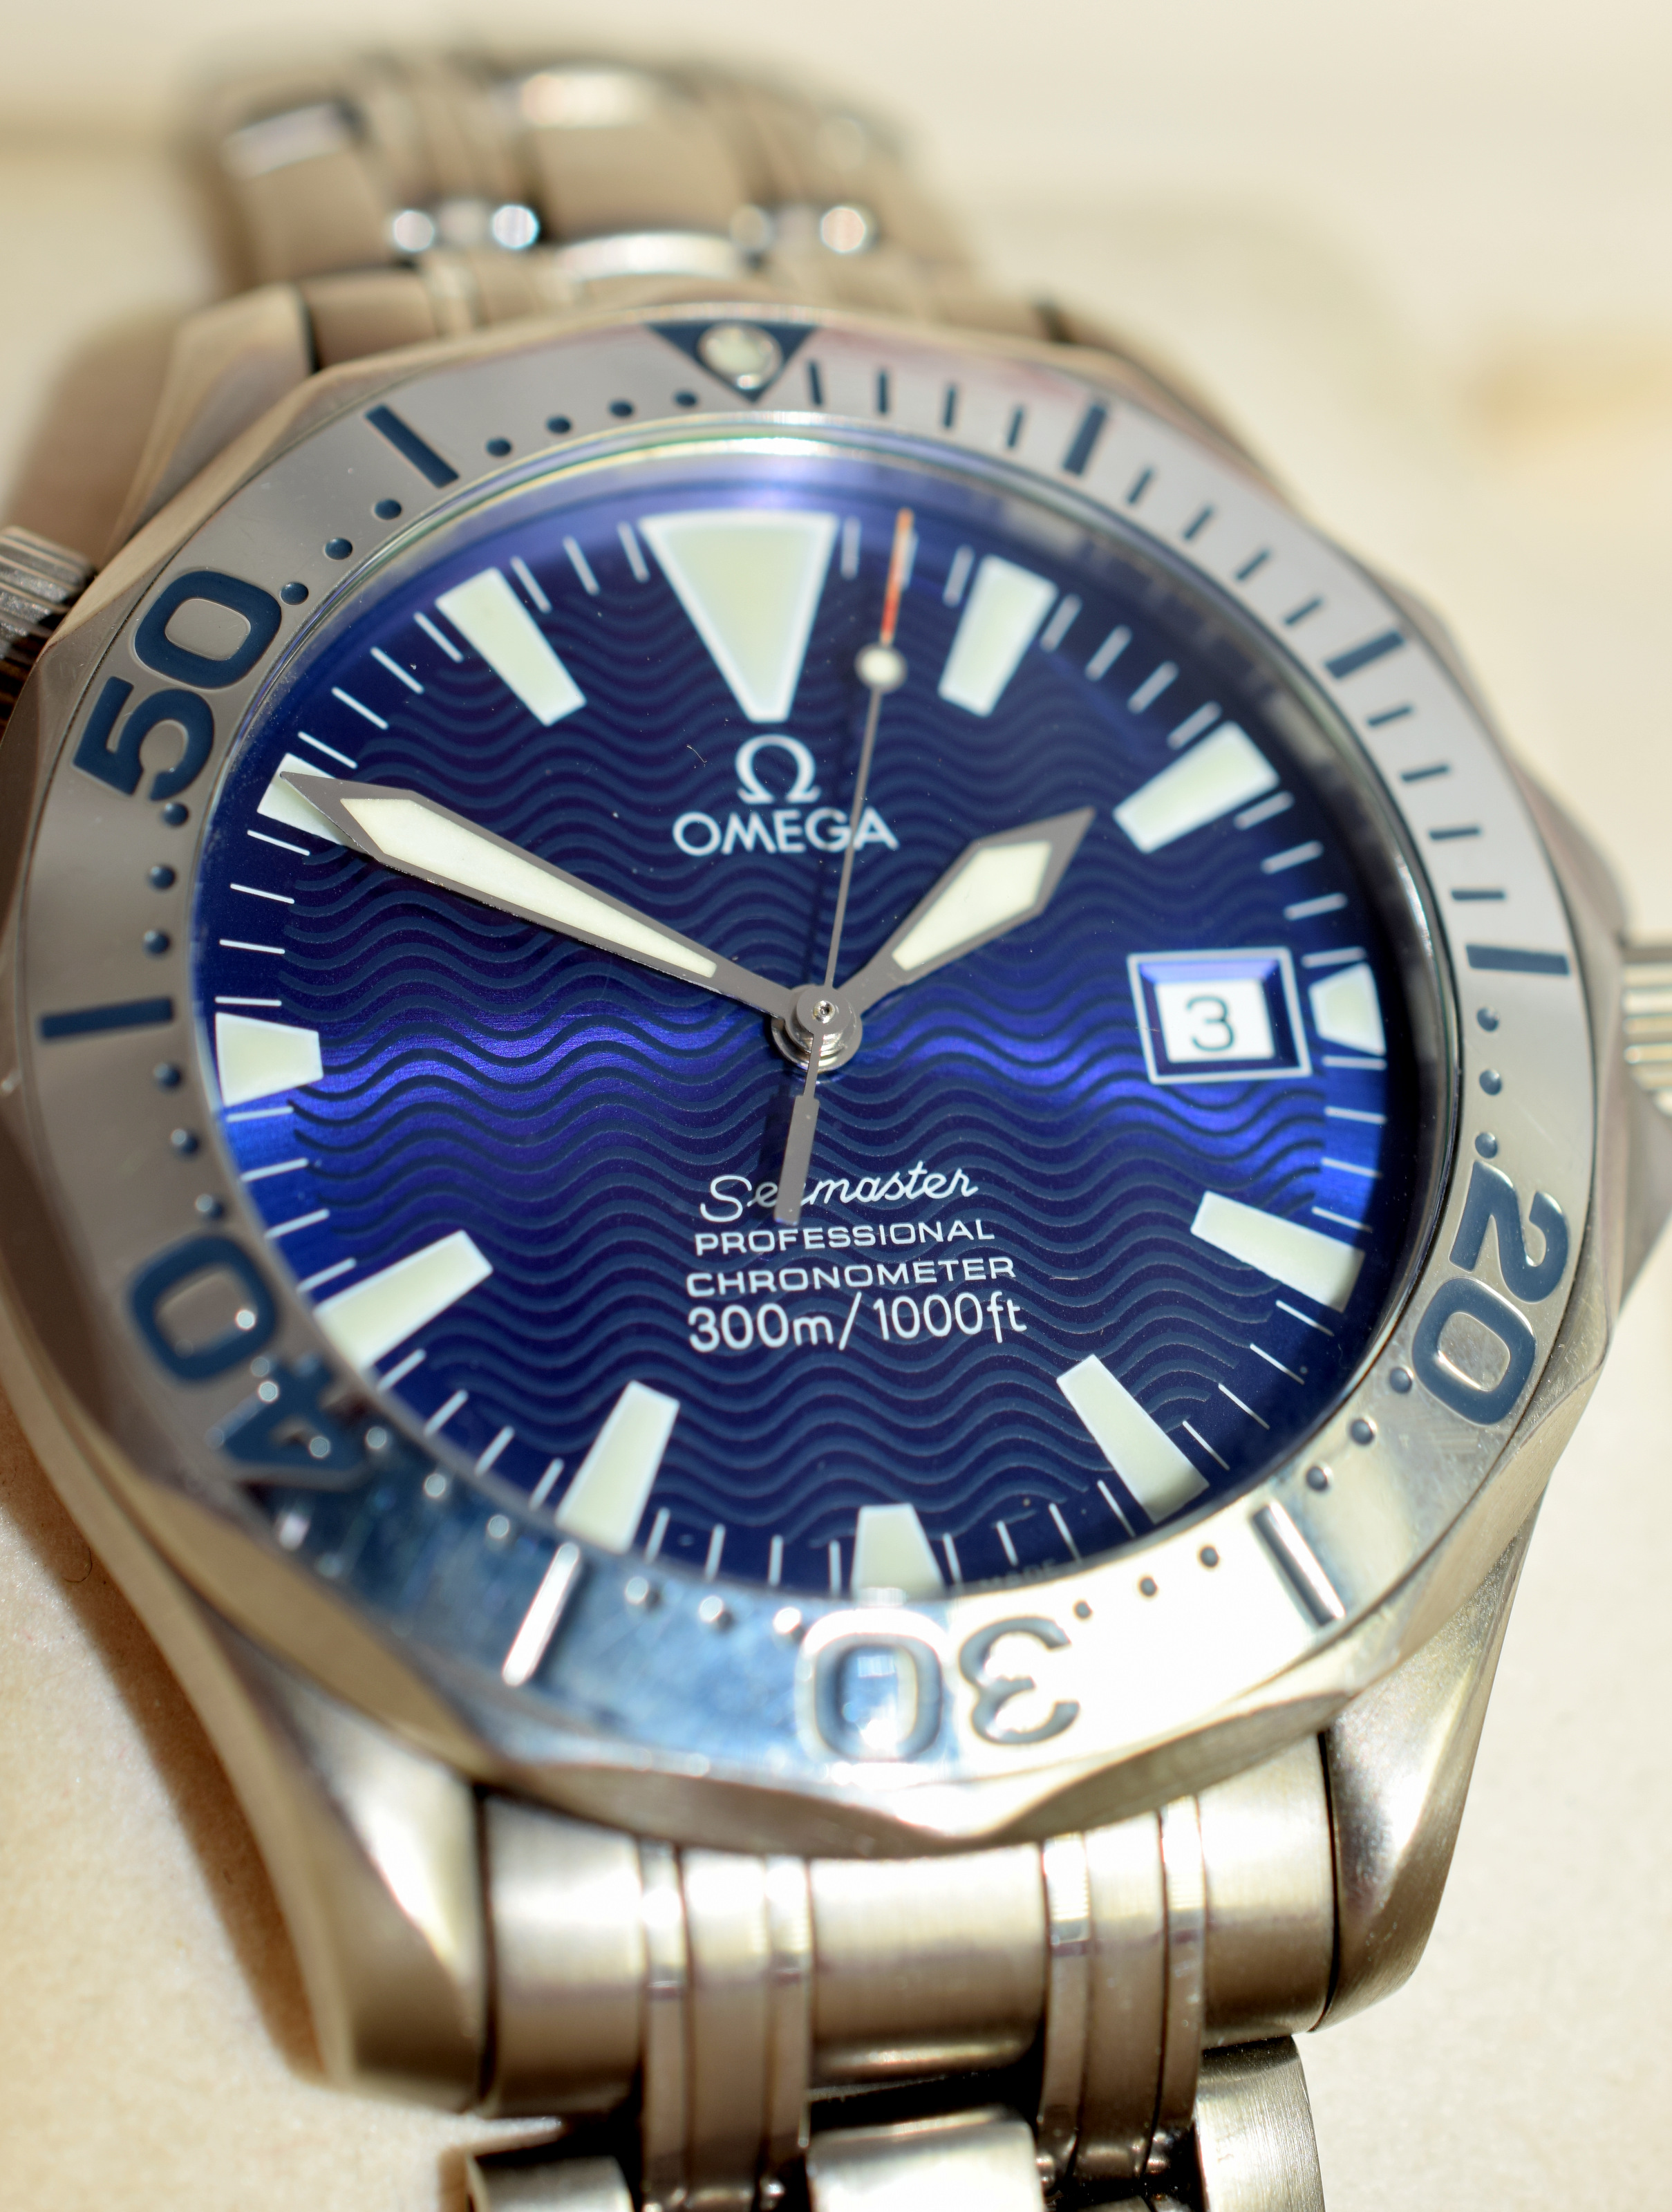 Omega Seamaster Professional Chronometer 300mts/1000ft In Titanium On Titanium Bracelet